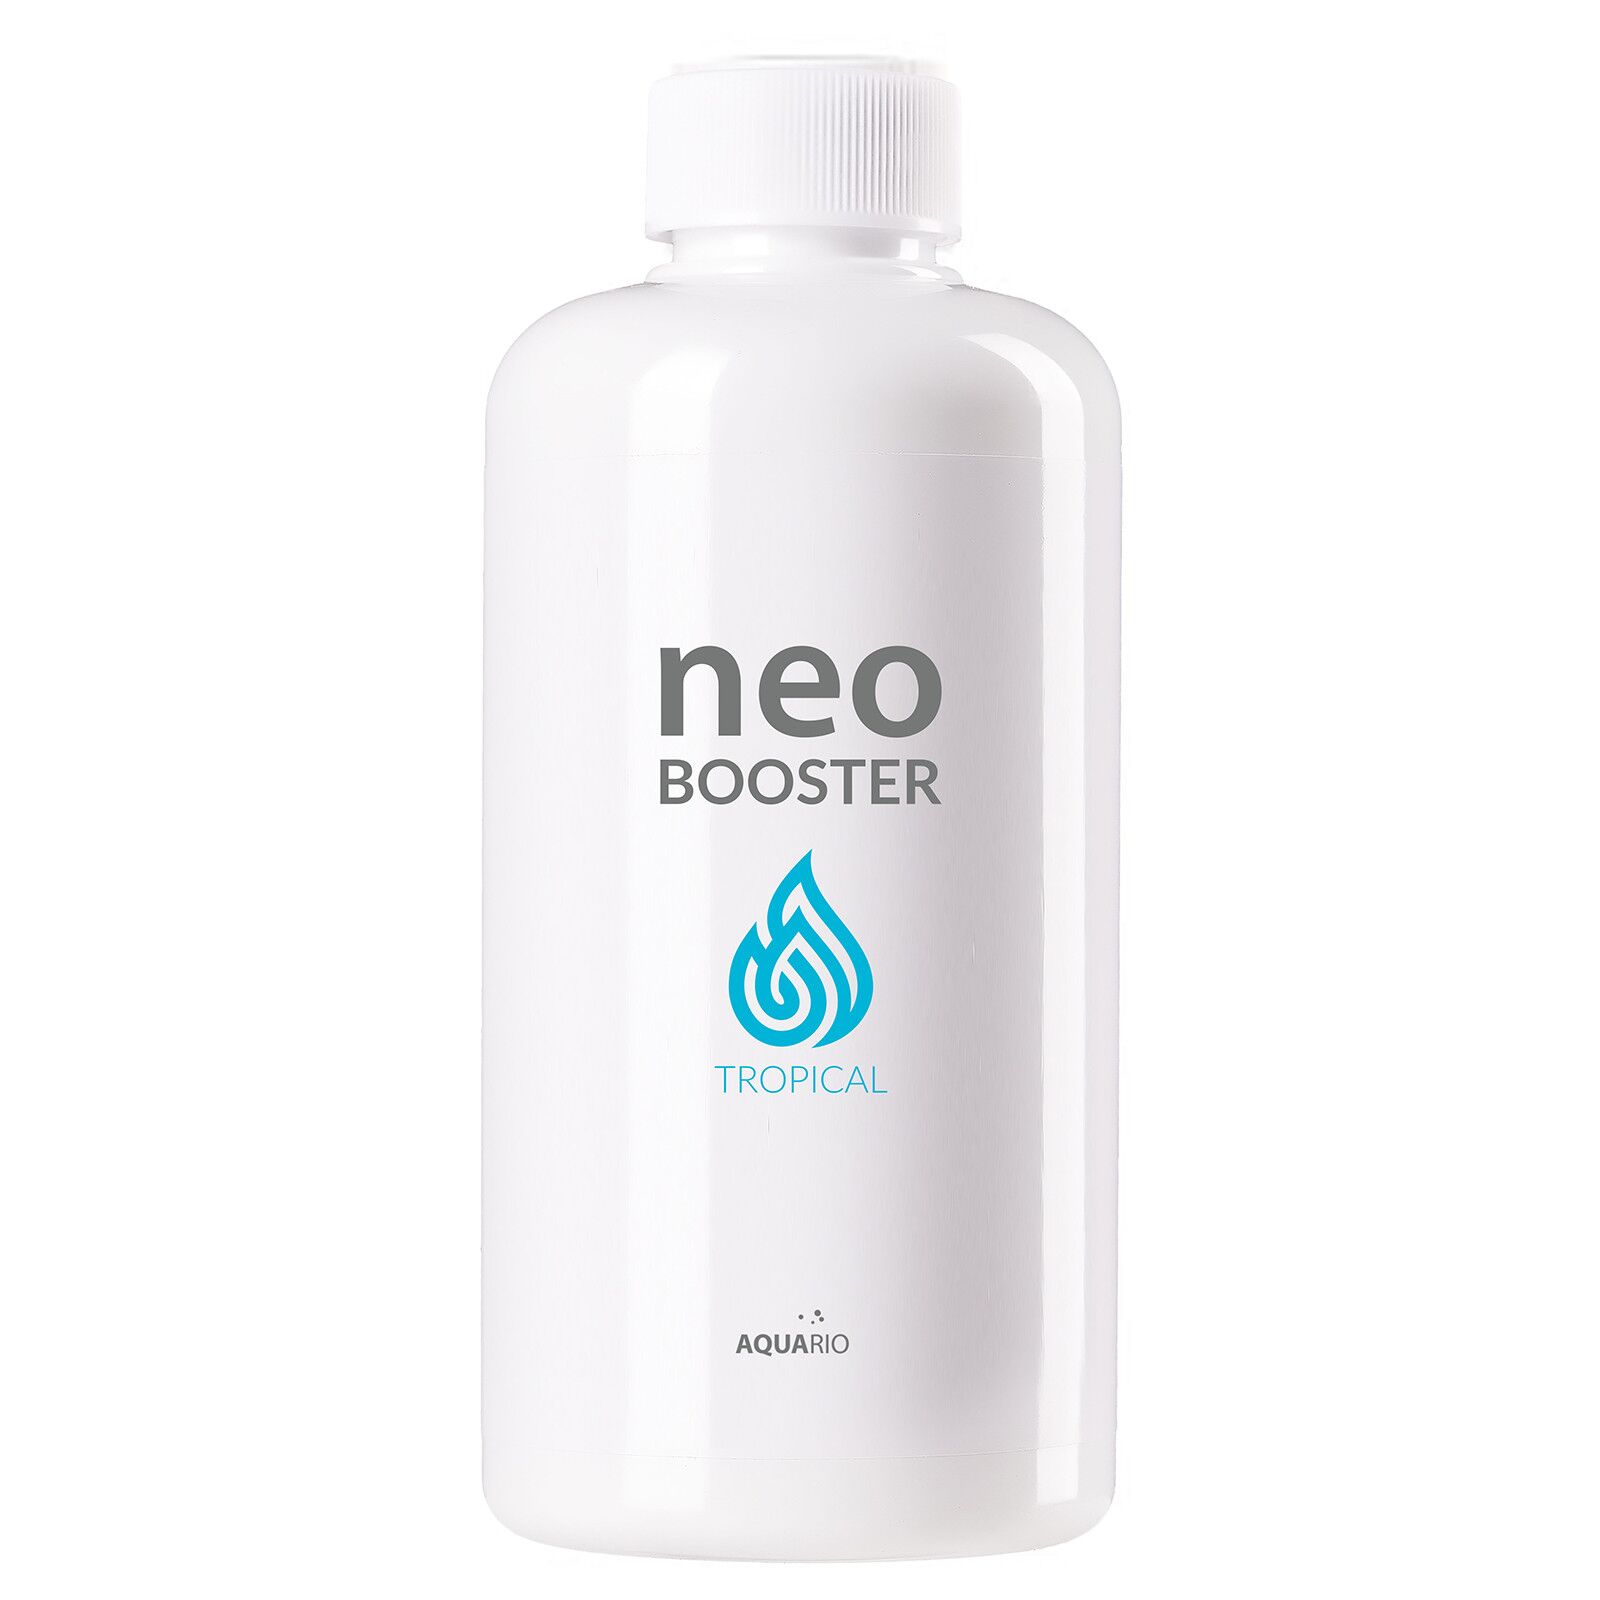 AQUARIO - Neo Booster Tropical - Water Conditioner